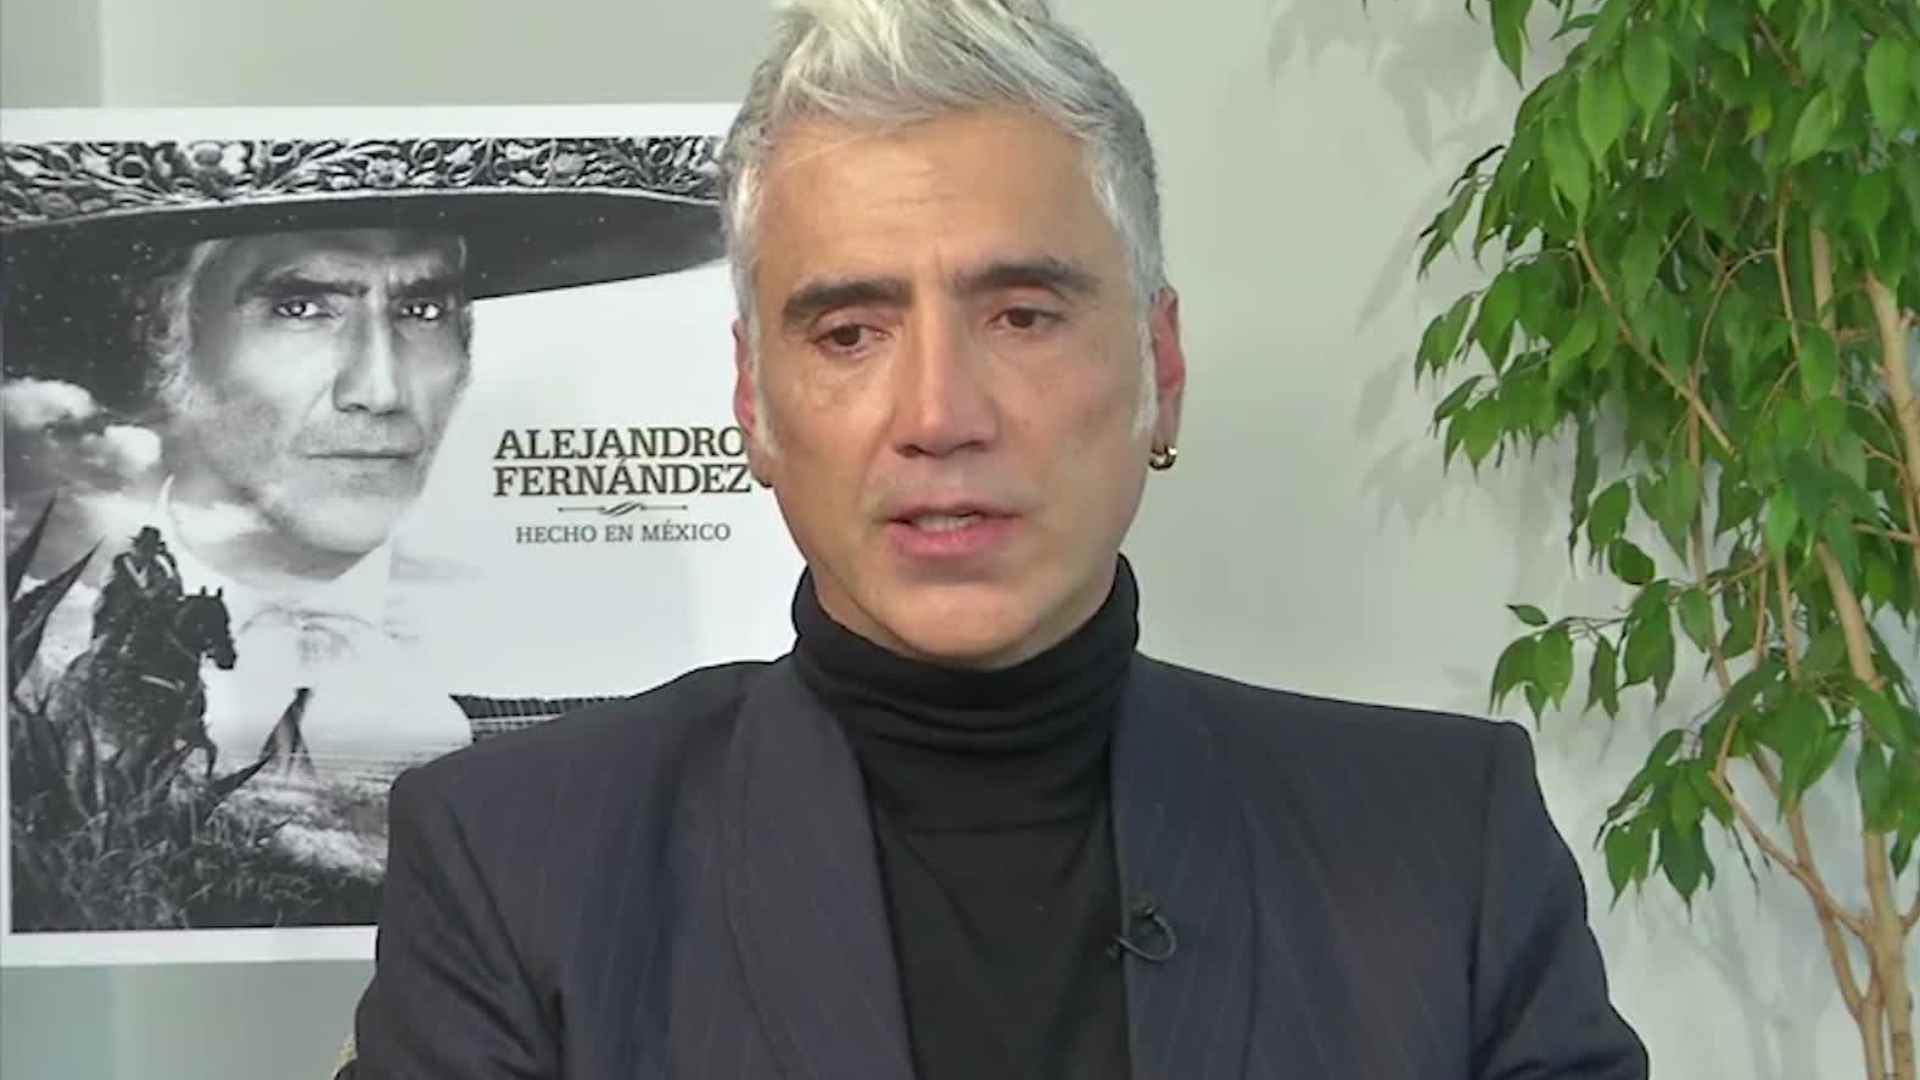 Alejandro Fernández